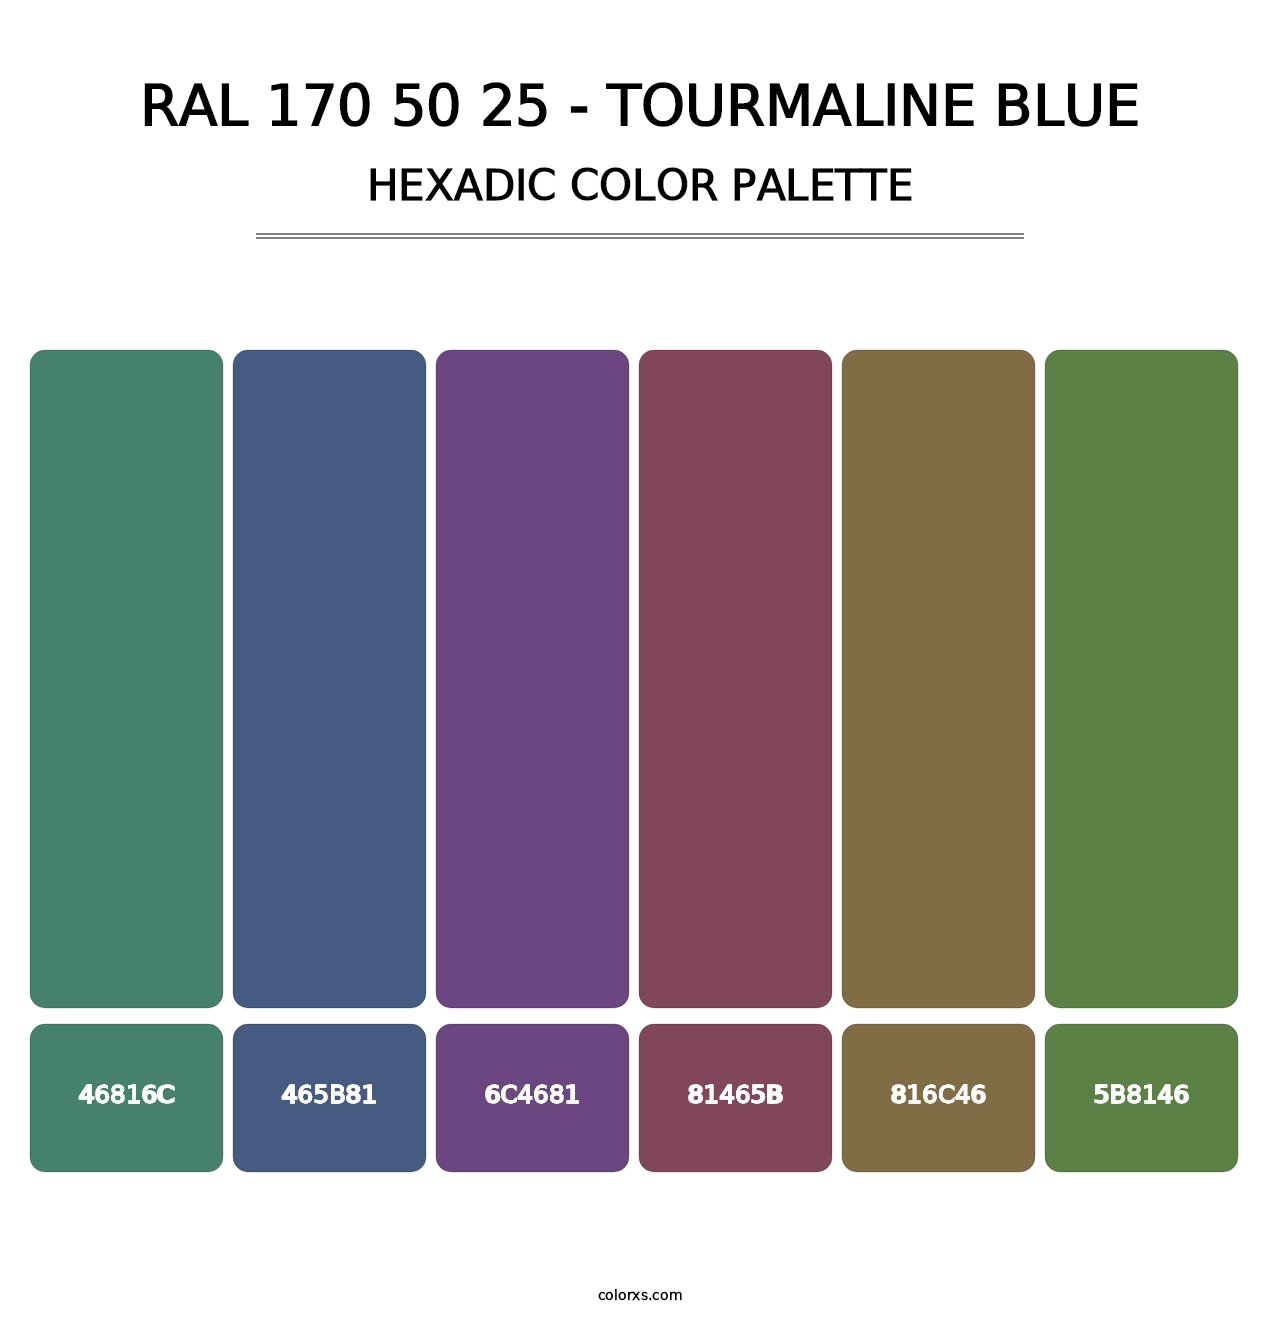 RAL 170 50 25 - Tourmaline Blue - Hexadic Color Palette